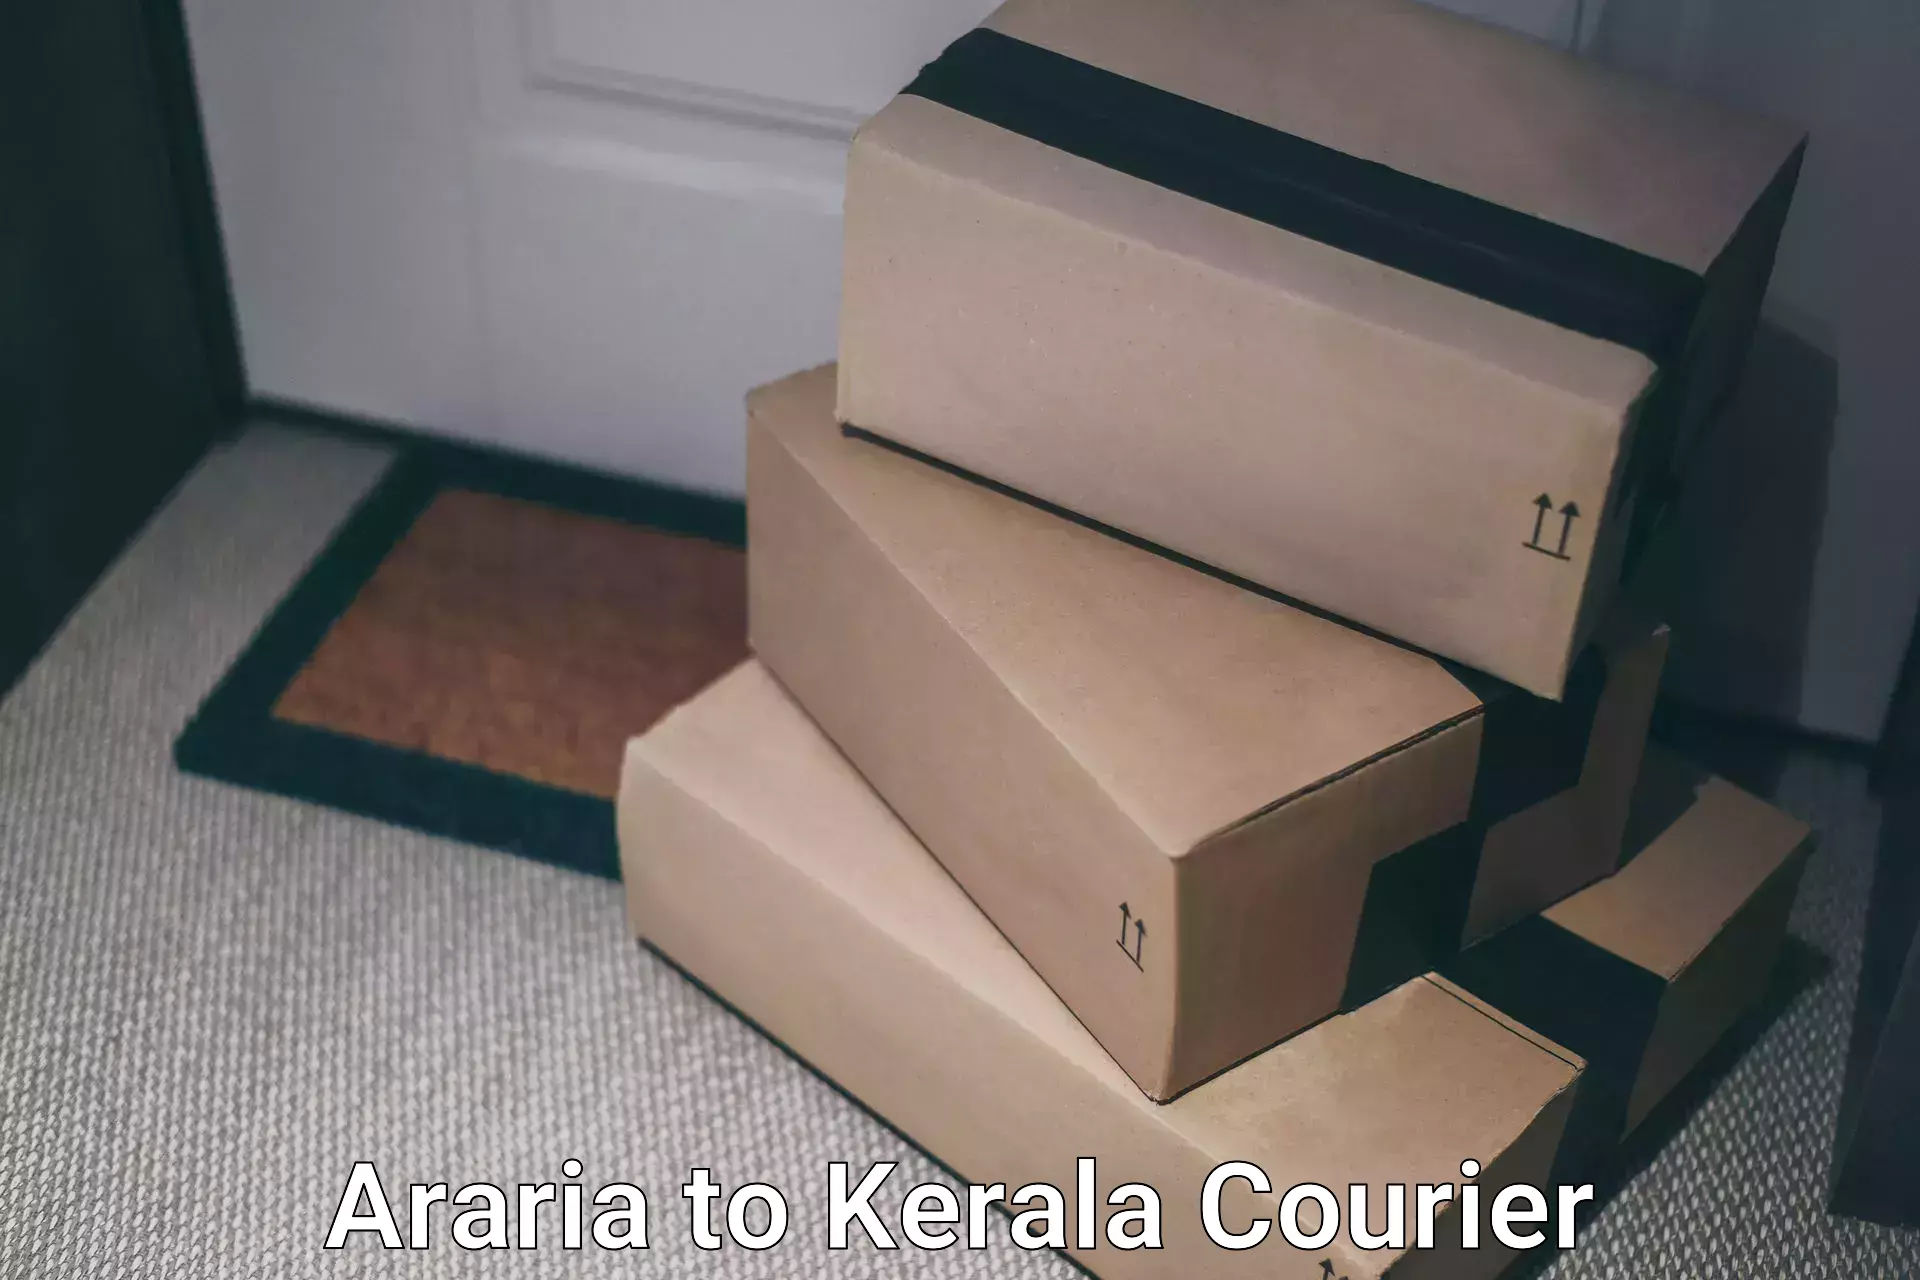 Courier service comparison Araria to Allepey